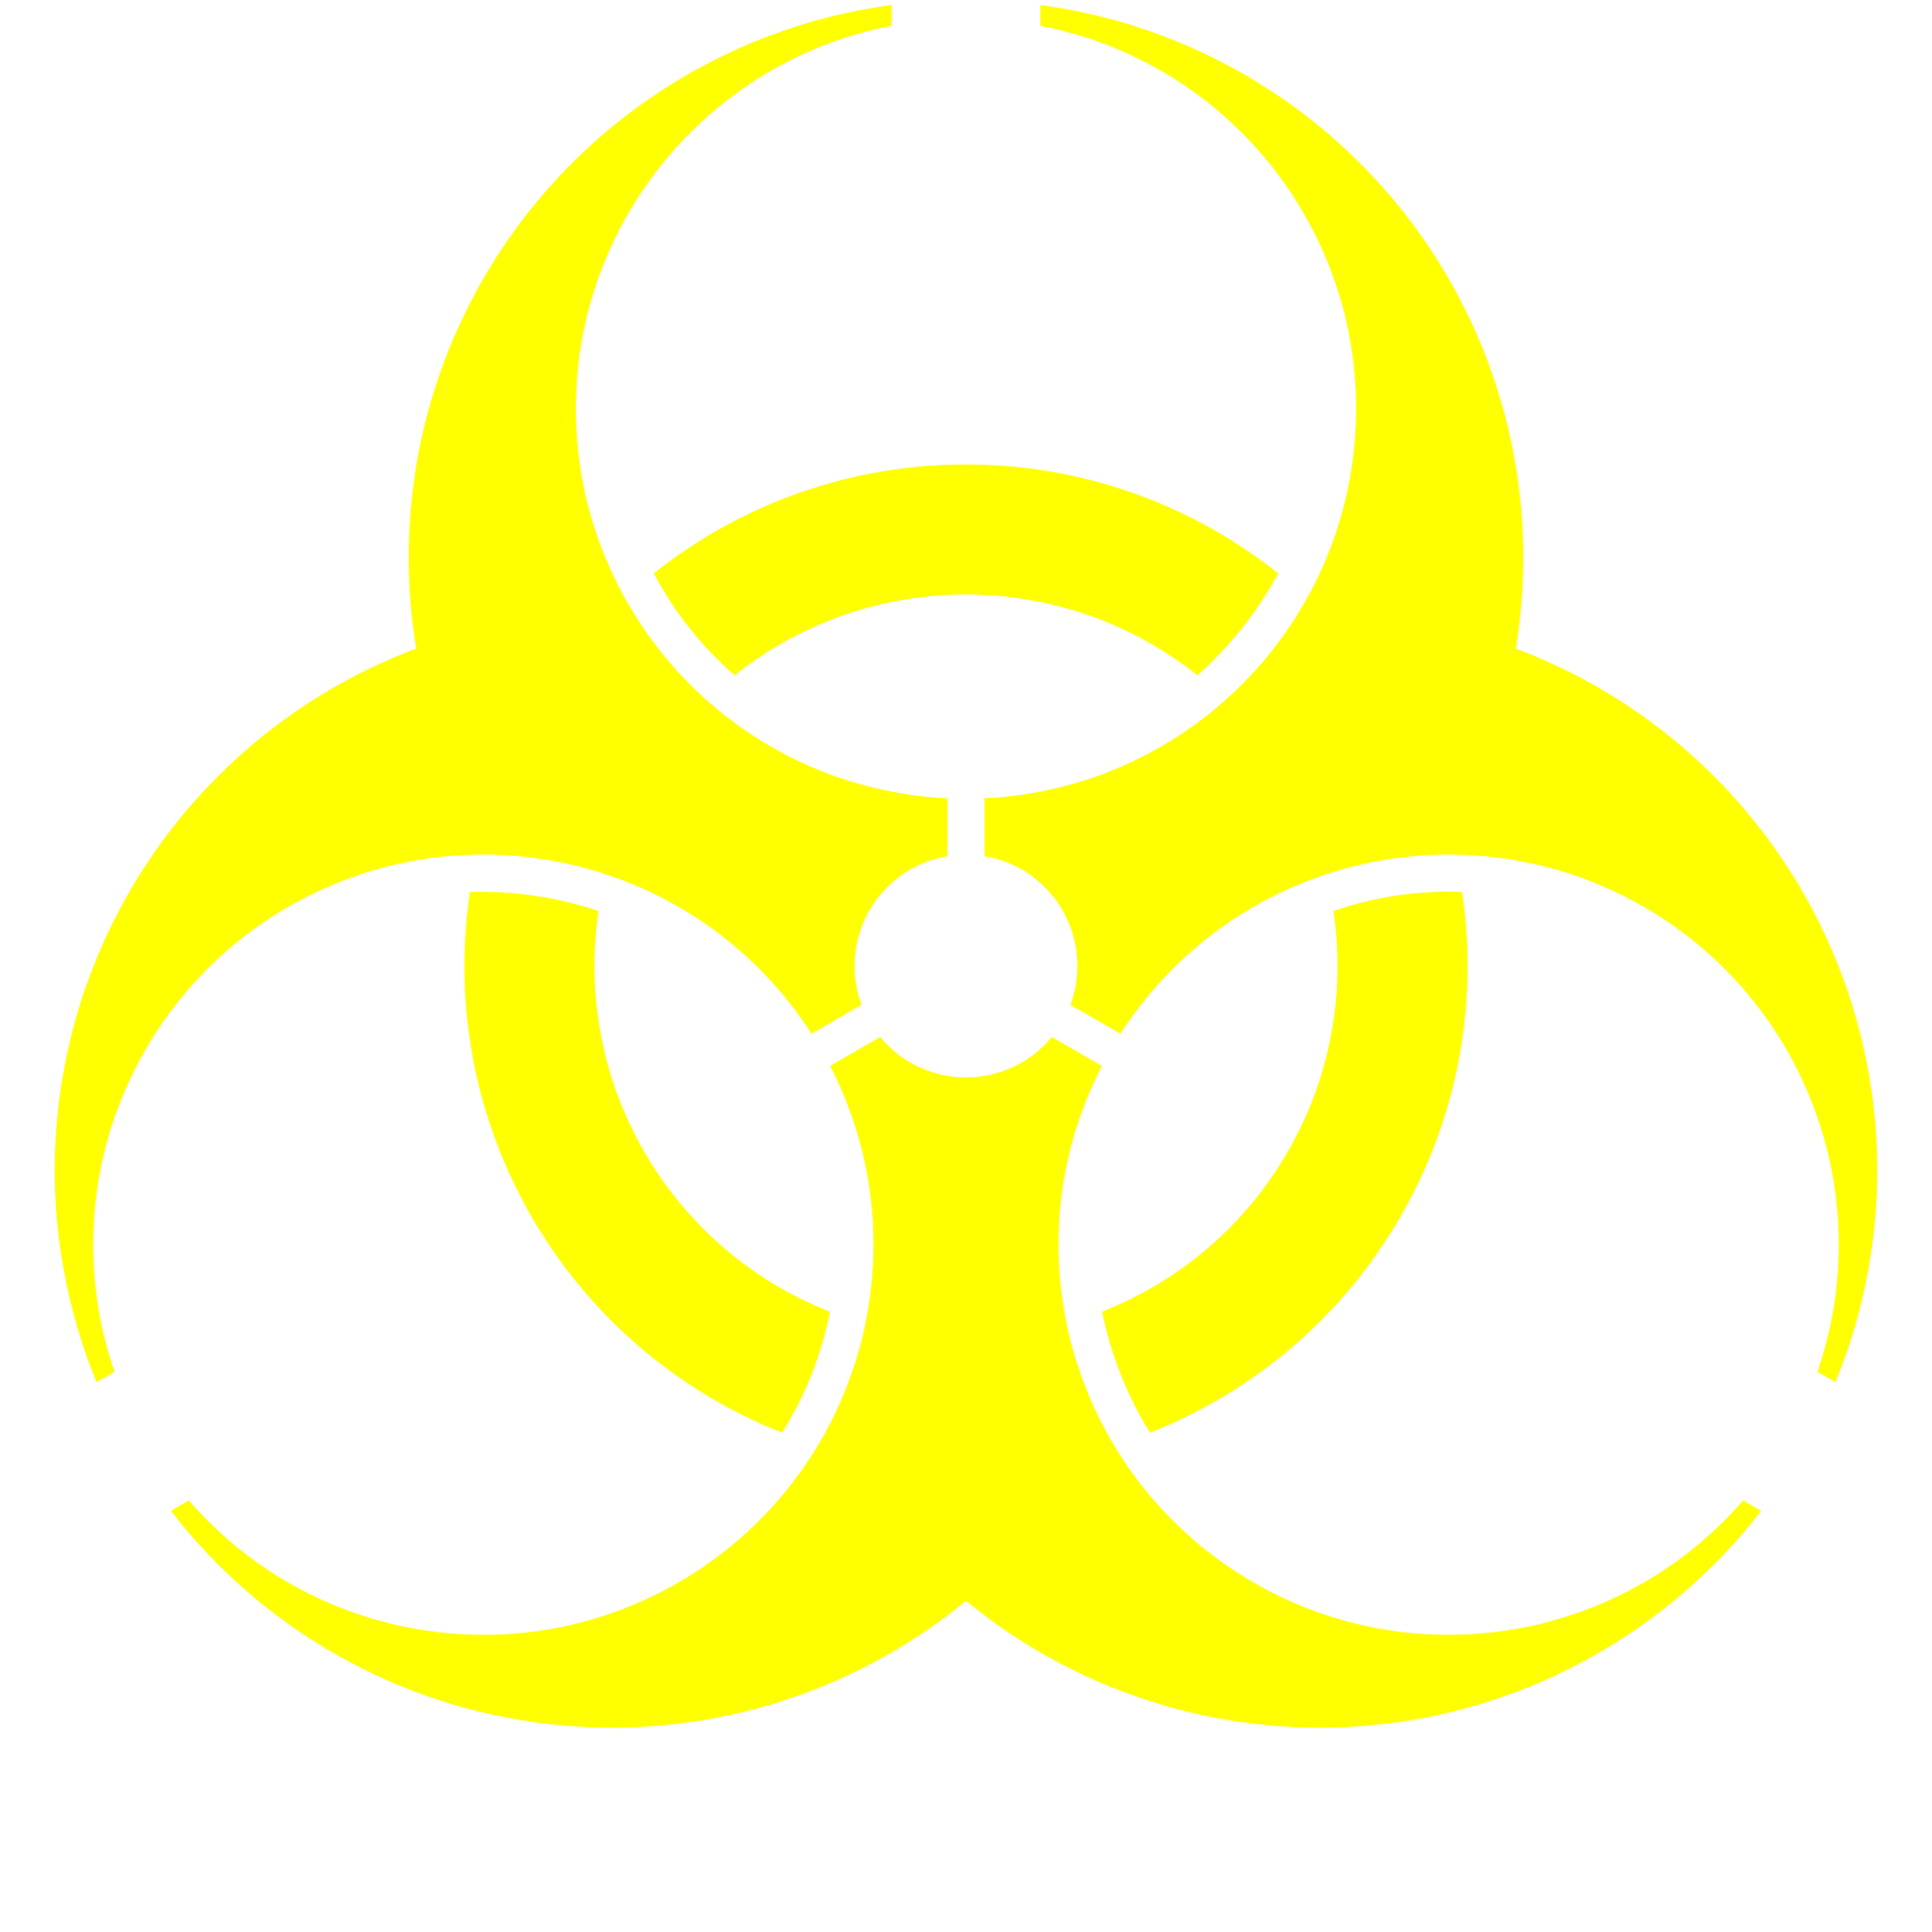 File:Biohazard symbol (yellow).svg